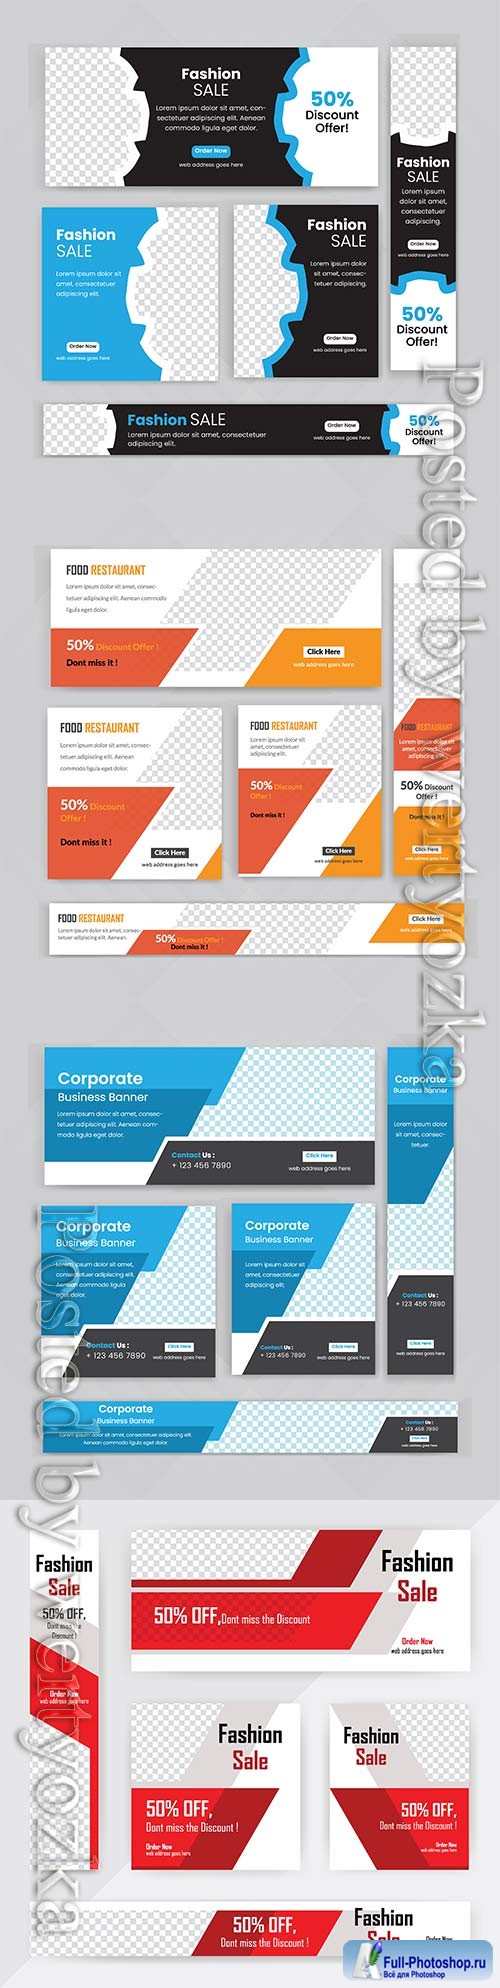 Web banner vector set design, business concept